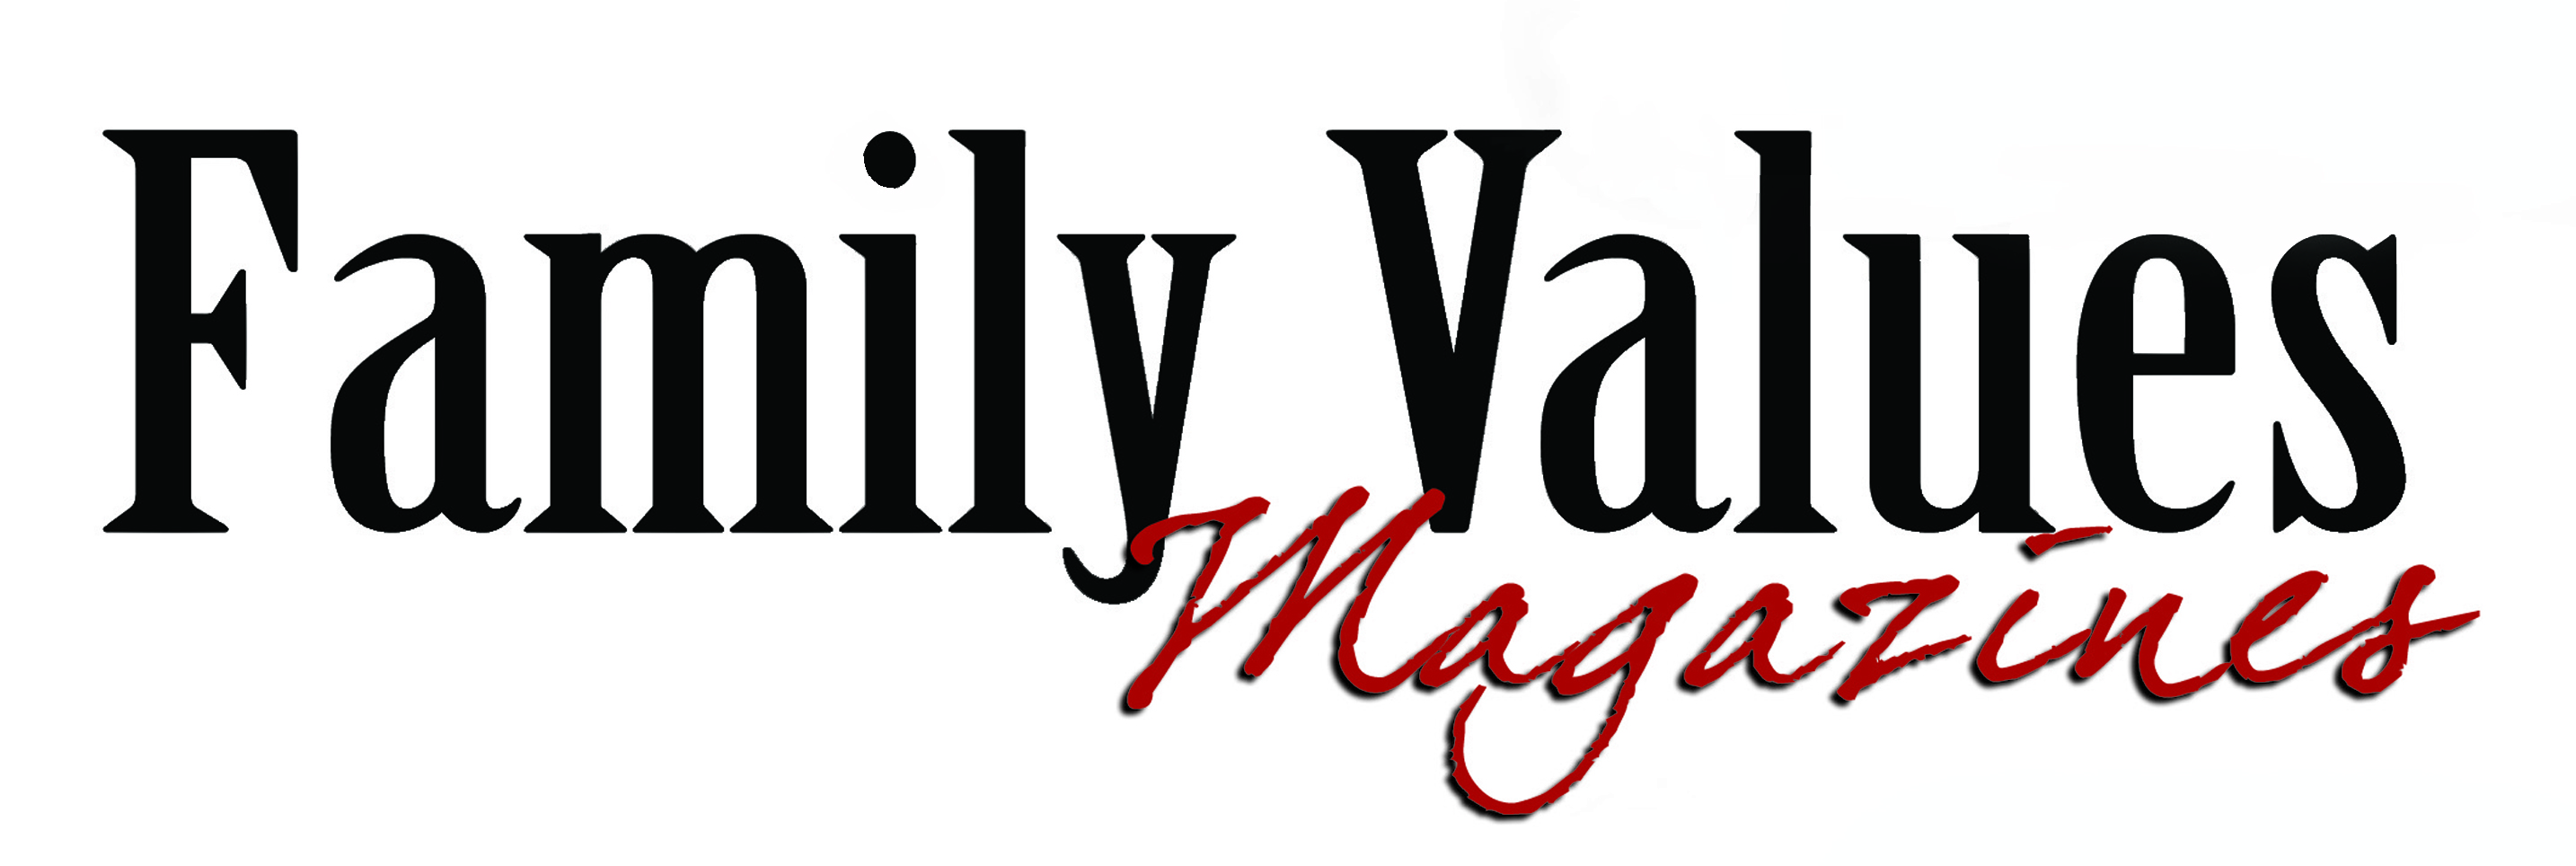 Family Values Coupon Magazine